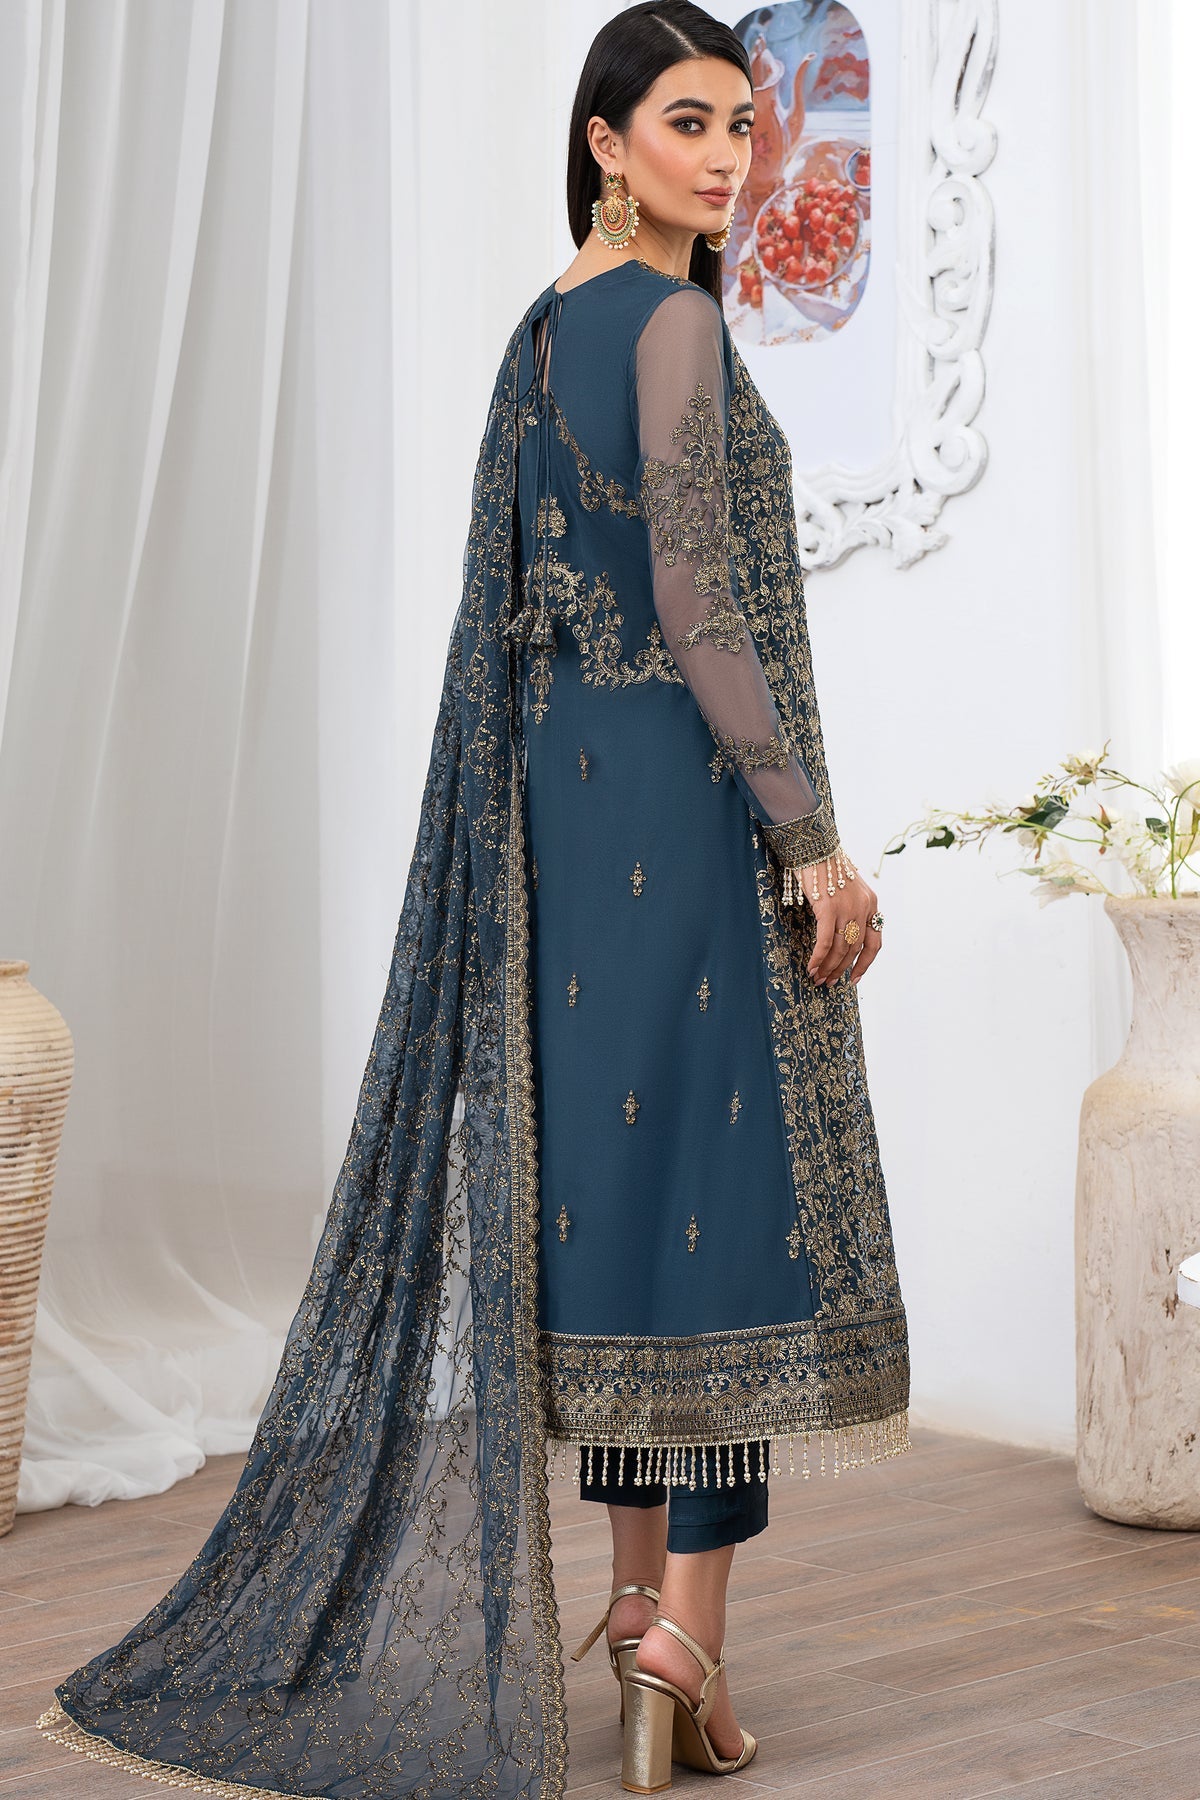 Shop Now, MEYSA - ZLM-07 - Meeral Luxury Formals 2023 - Zarif - Shahana Collection UK - Wedding and Bridal Dresses - Pakistani Dresses in UAE - Shahana UK